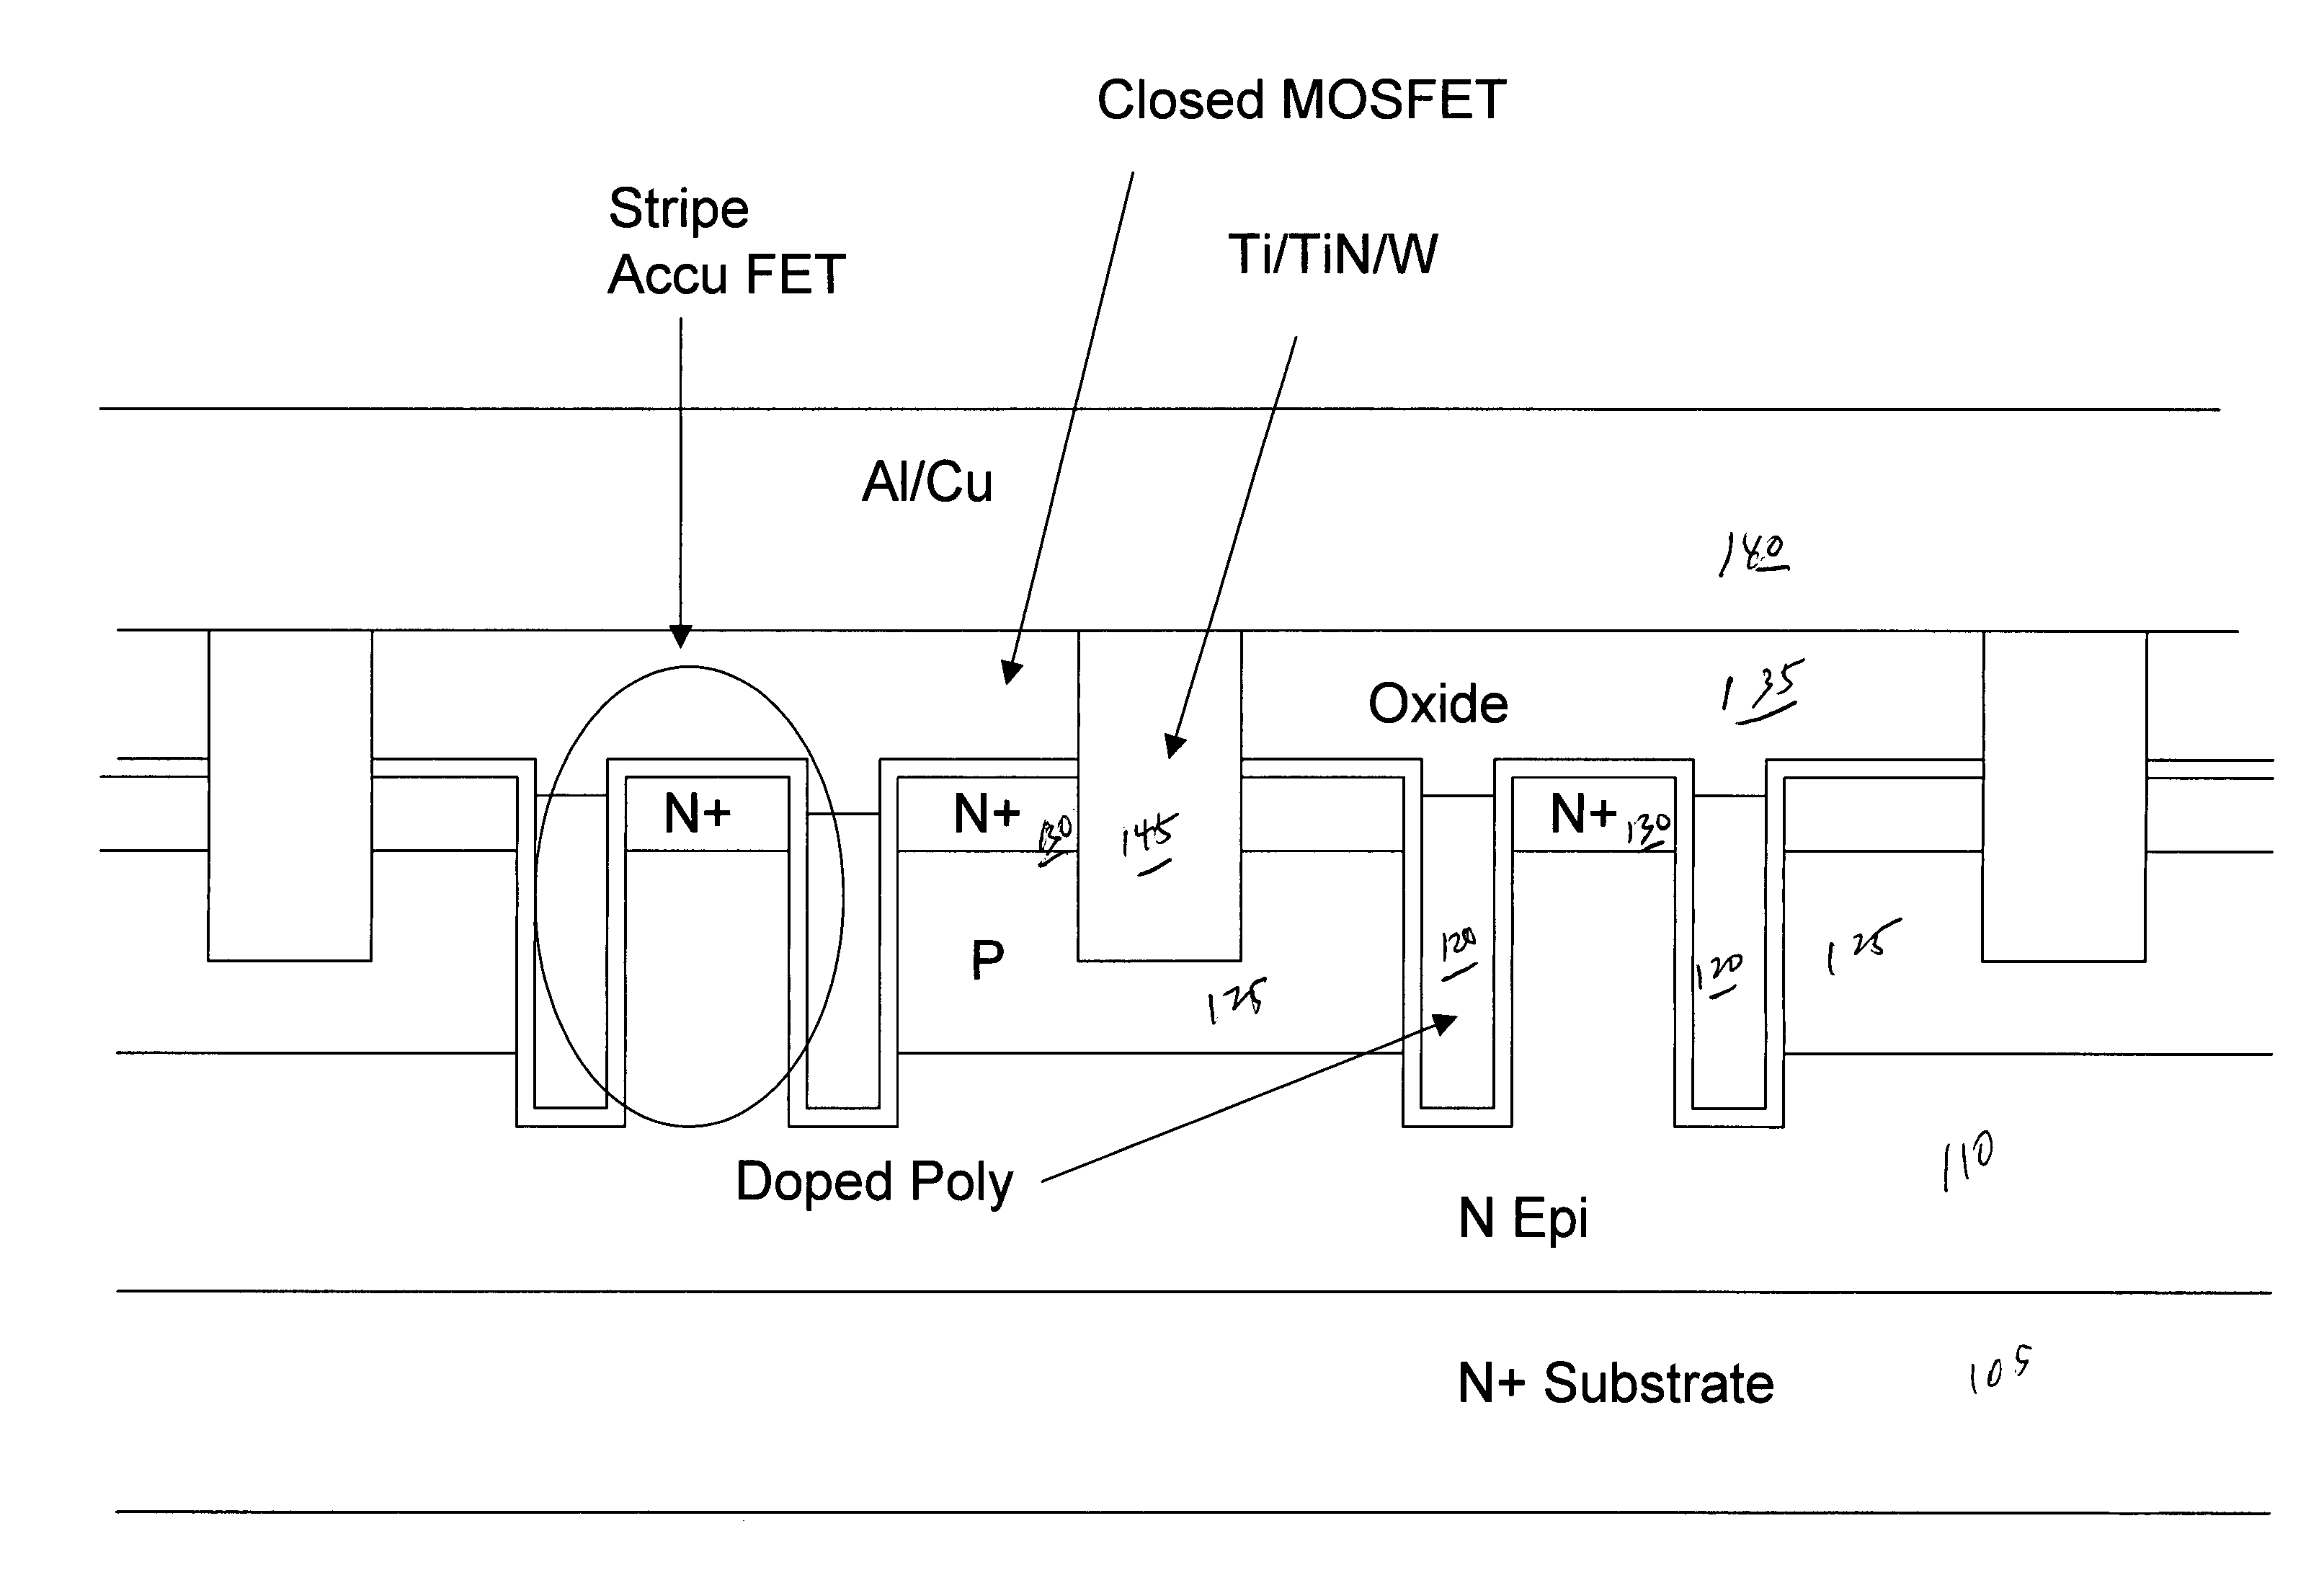 High density hybrid MOSFET device